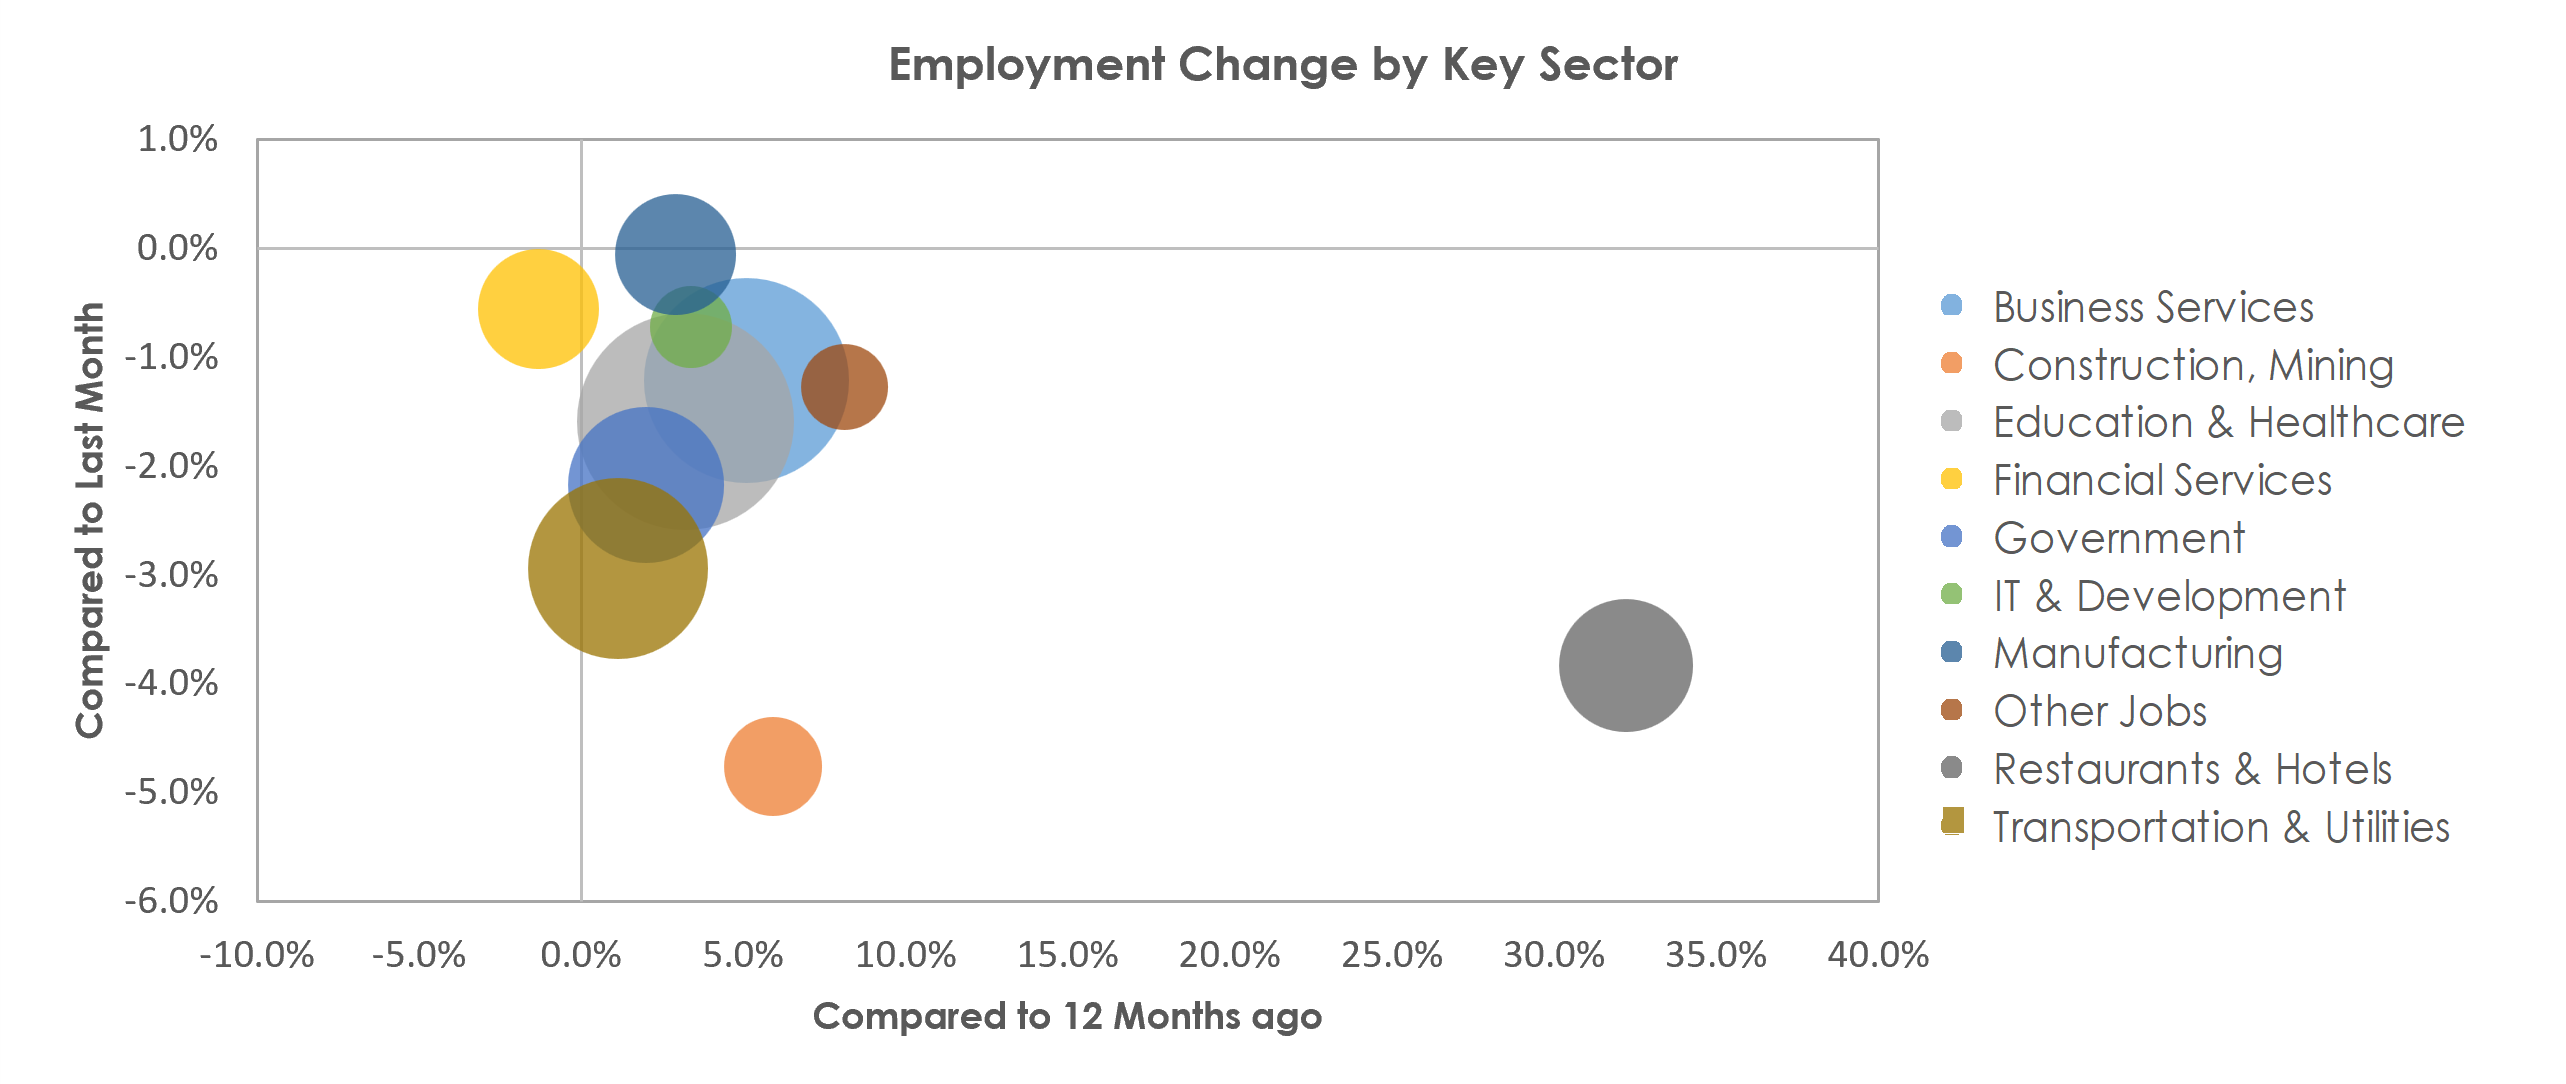 Boston-Cambridge-Nashua, MA-NH Unemployment by Industry January 2022